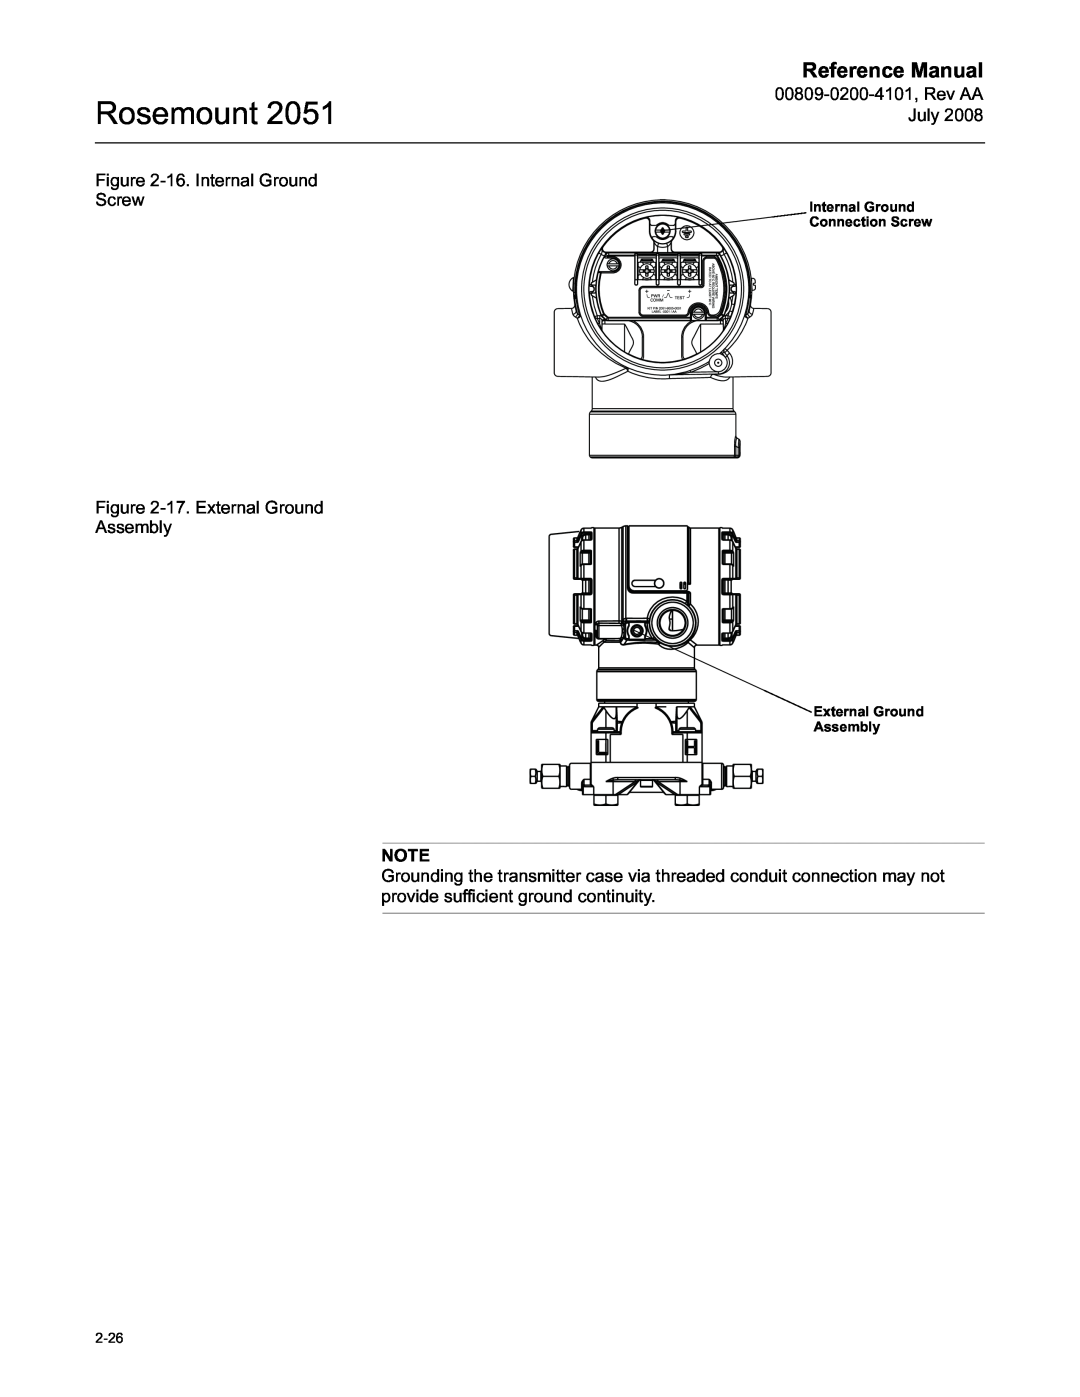 Emerson Process Management 2051 Rosemount, Reference Manual, 00809-0200-4101,Rev AA July, 16.Internal Ground Screw, 2-26 